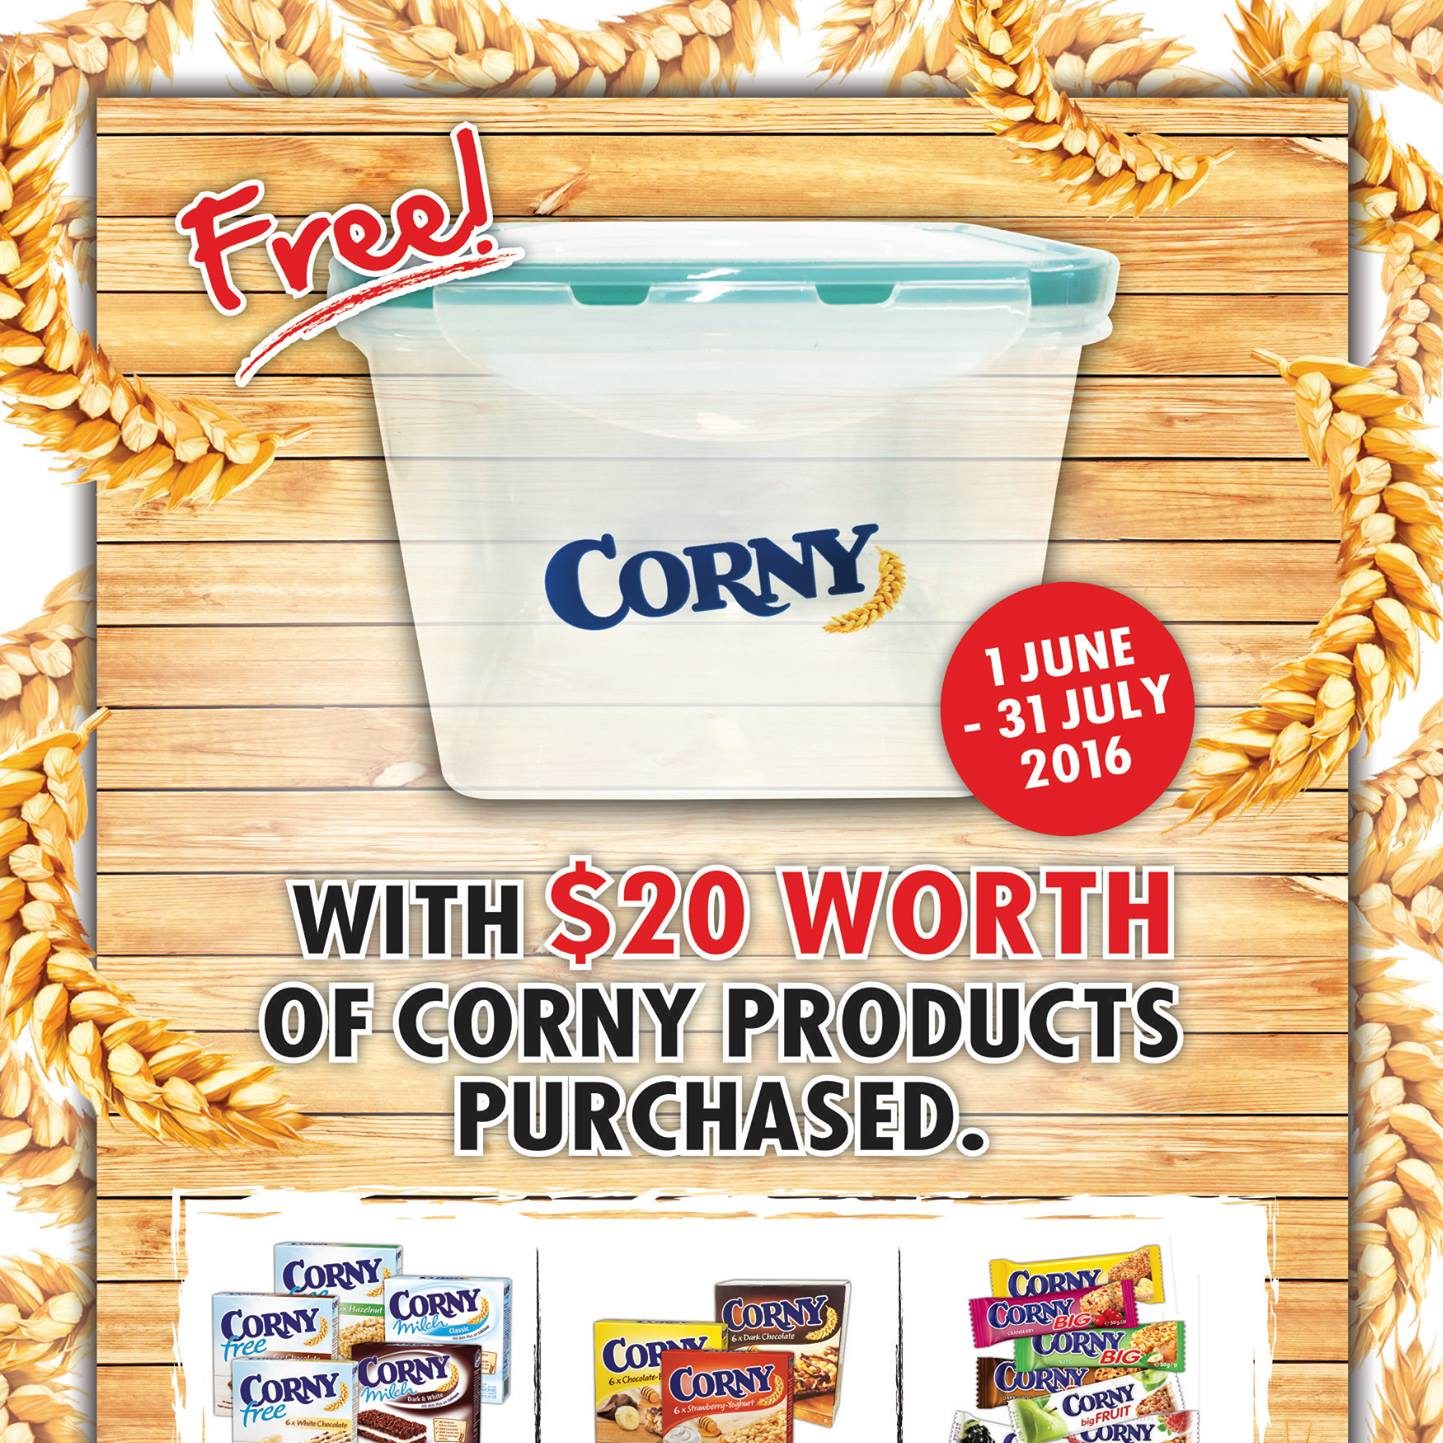 Choc Spot FREE Corny Container Singapore Promotion 1 Jun to 31 Jul 2016